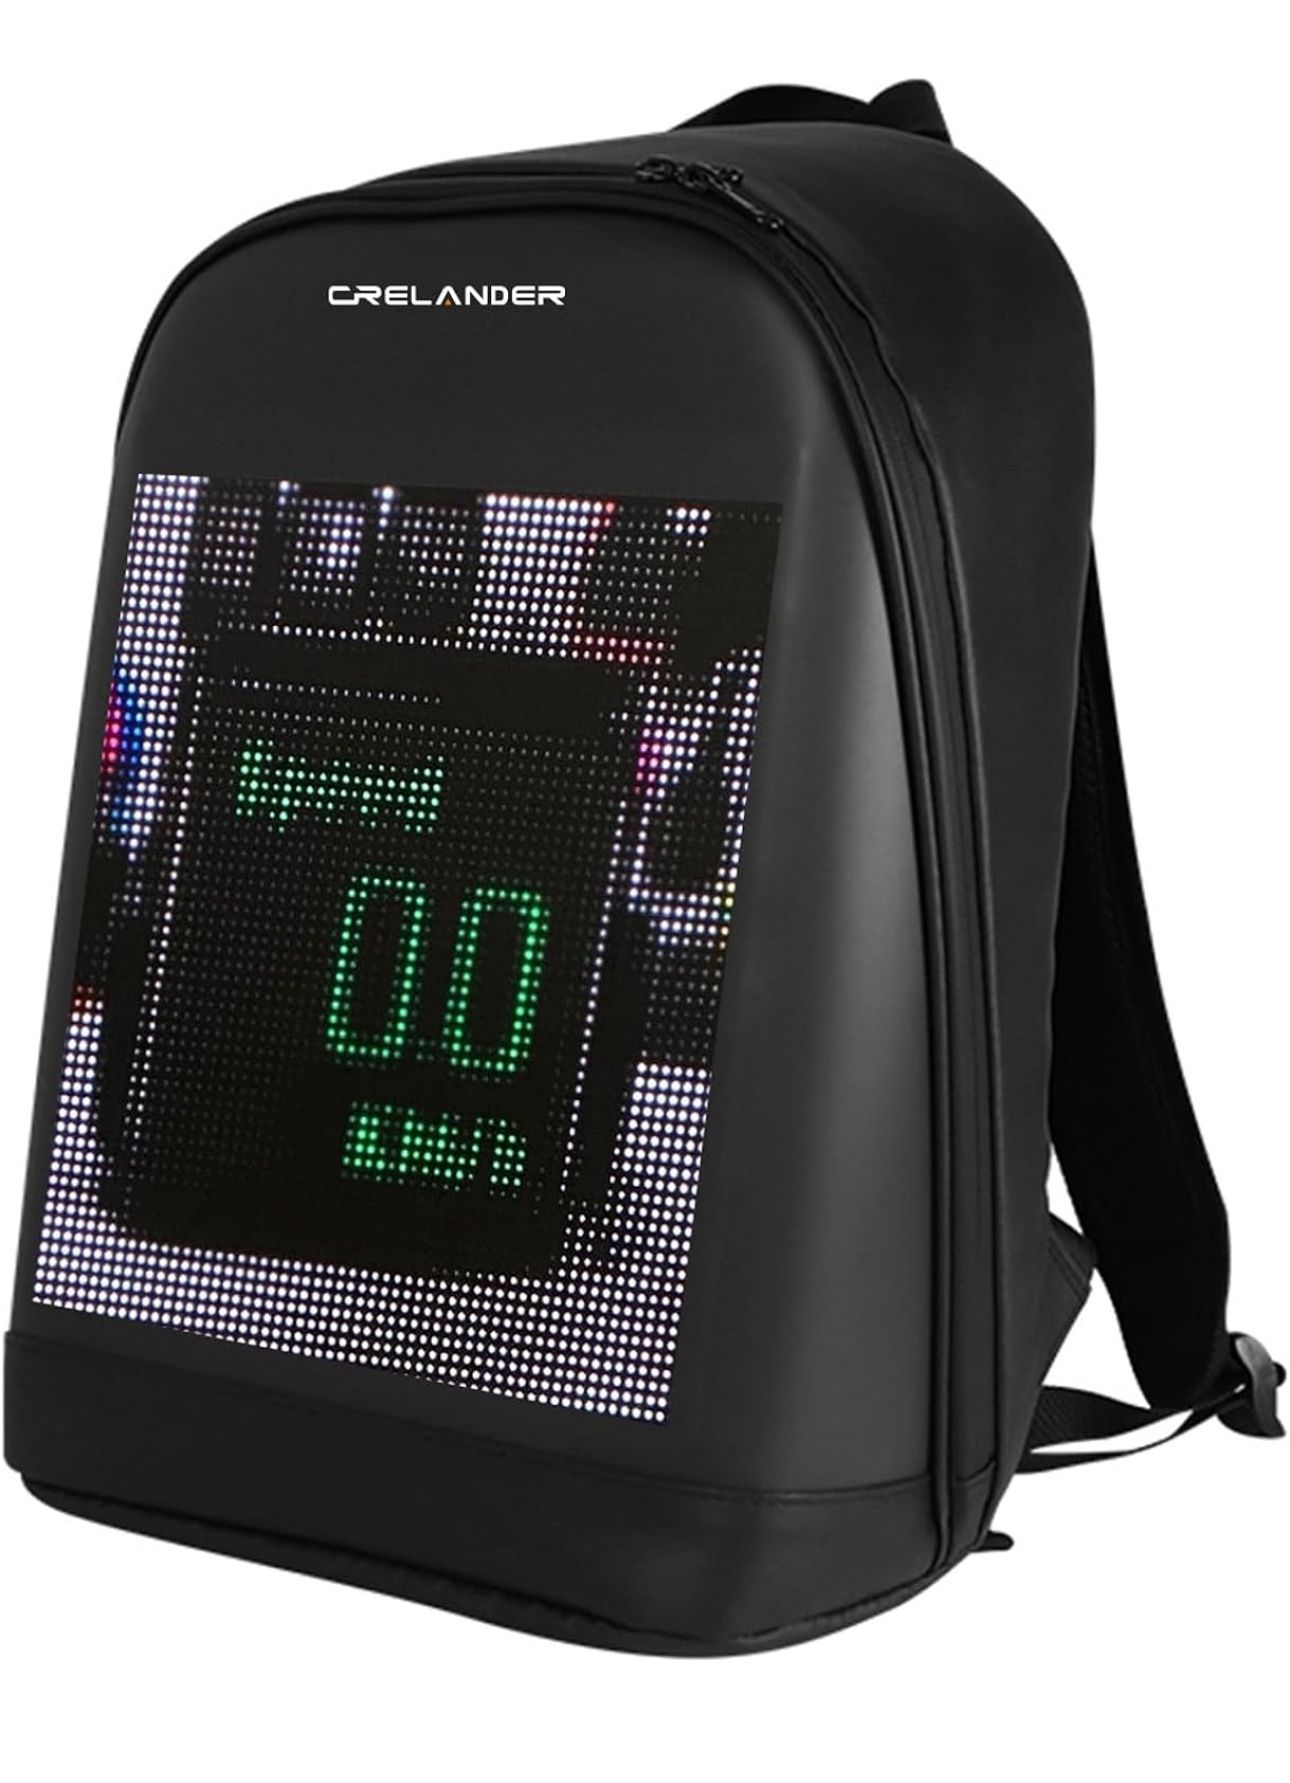 Crelander Laptop Backpack, Smart LED Dynamic Backpack Waterproof Backpack Luggage Bag Cycling Travel Daypack Rucksack Personalized Gifts for Men Women